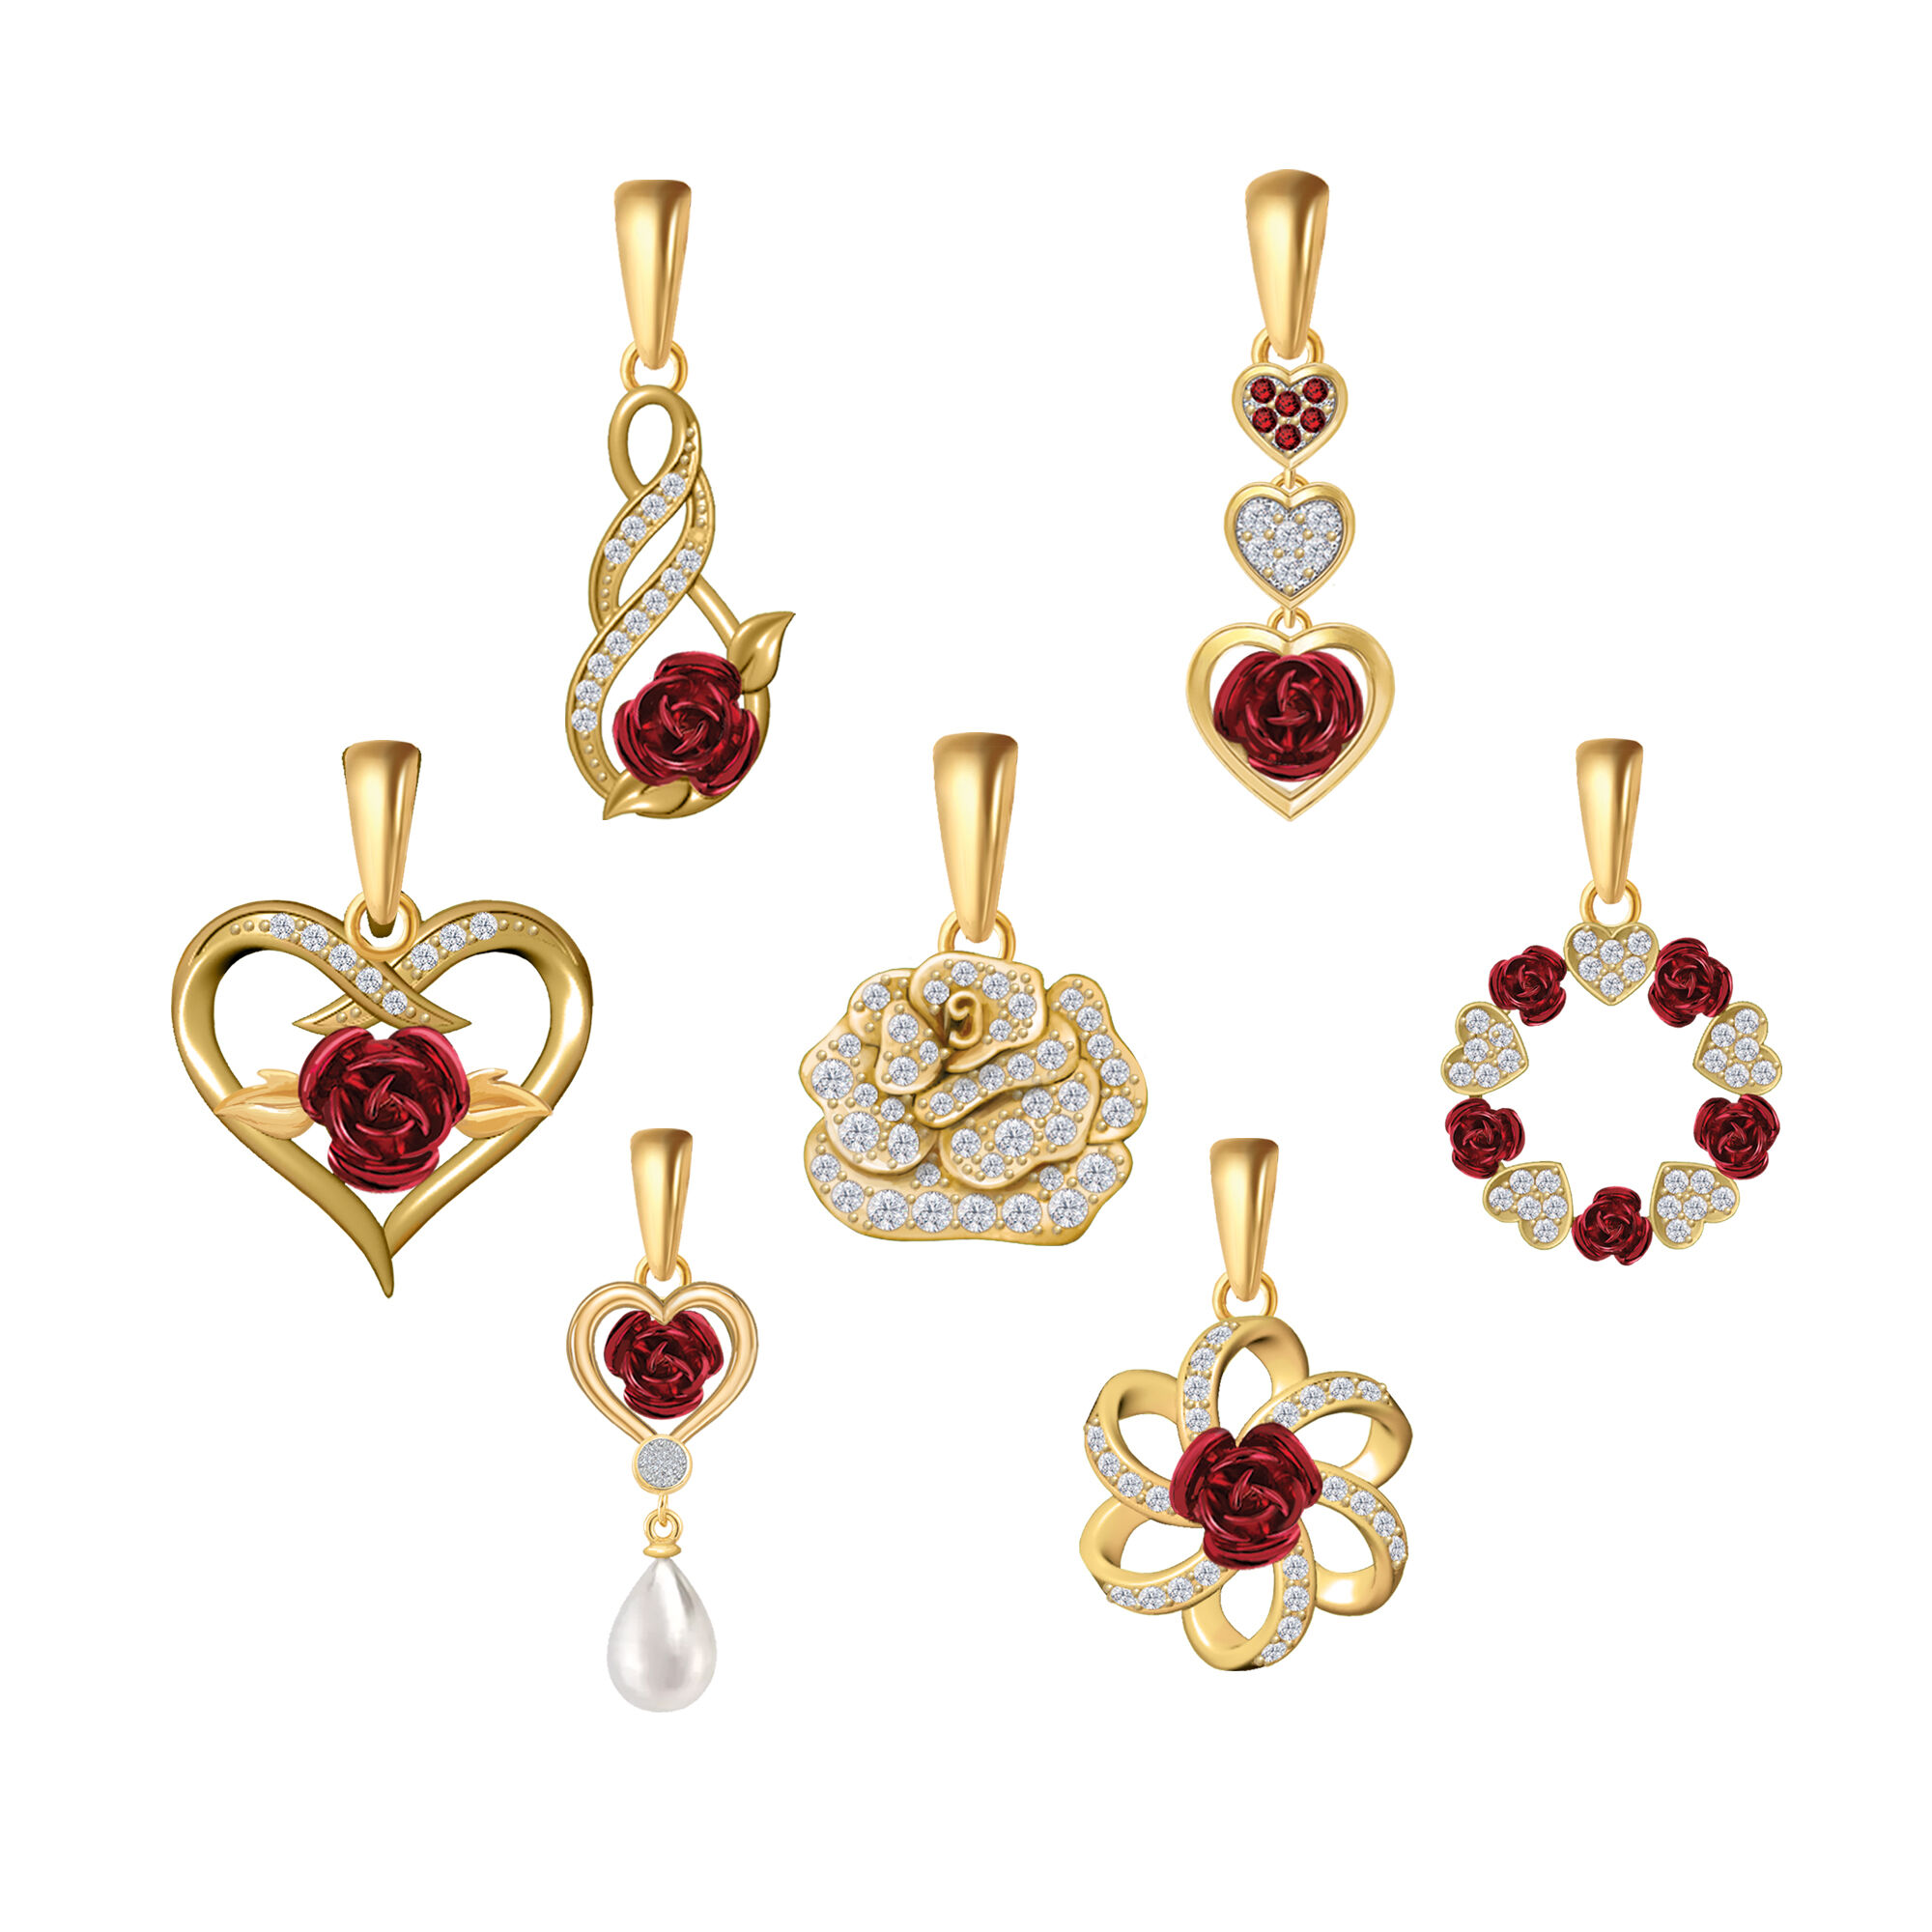 Romantic Roses Pendant Jewelry Box Set 10183 0016 g display box